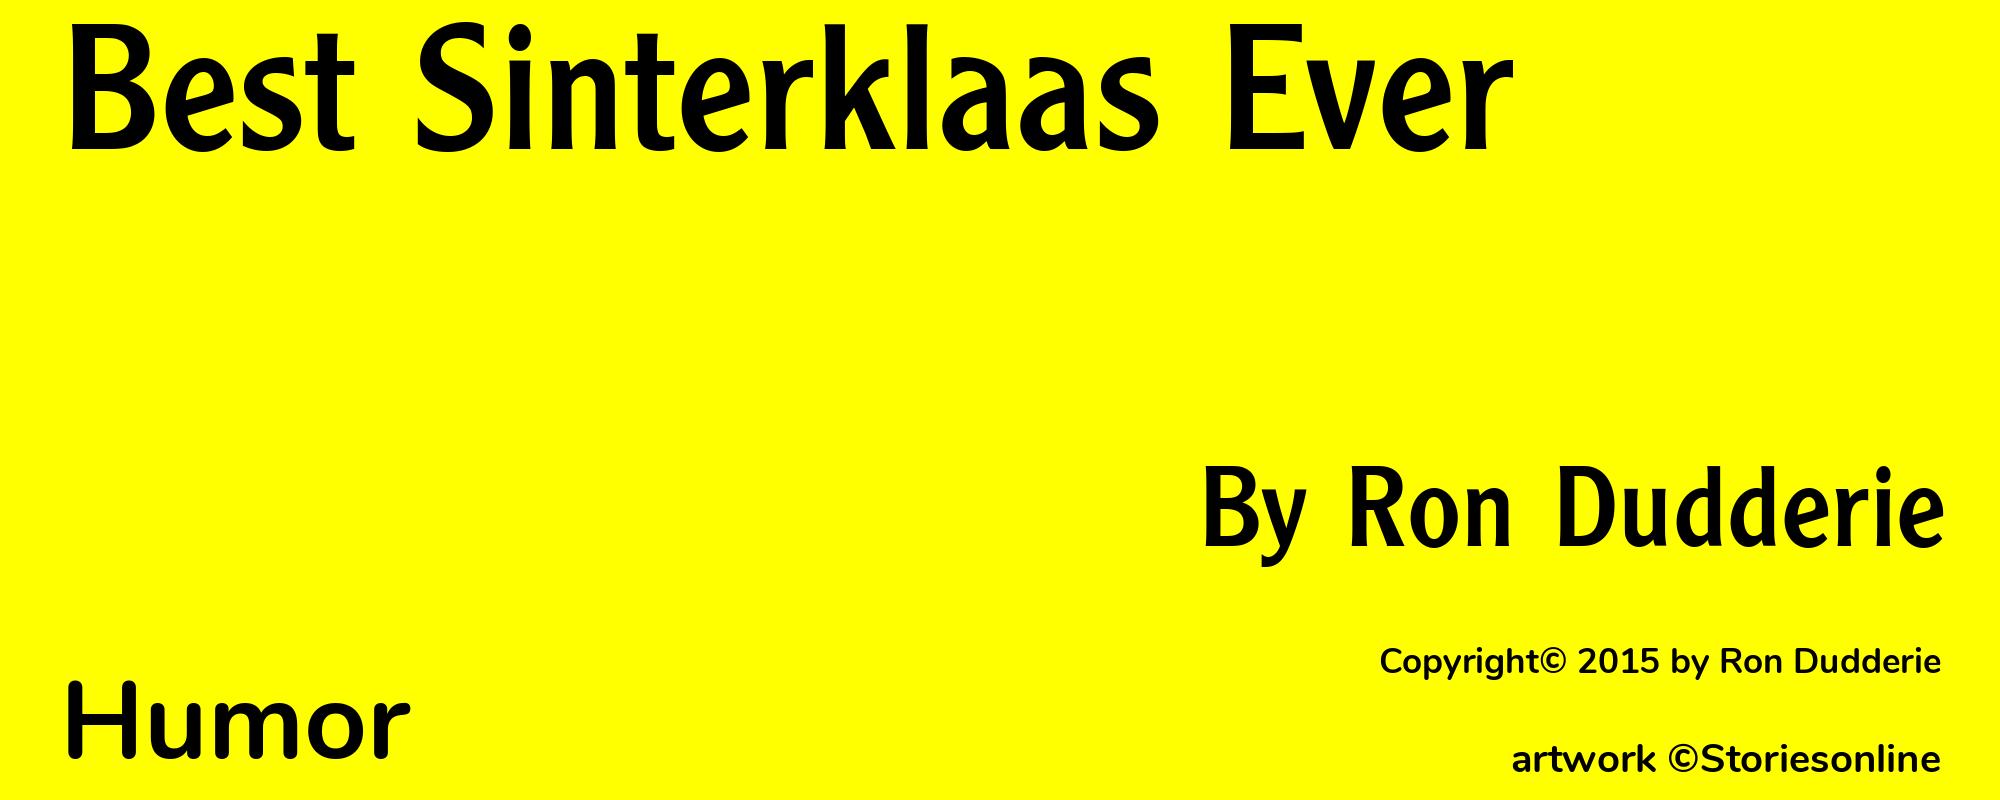 Best Sinterklaas Ever - Cover